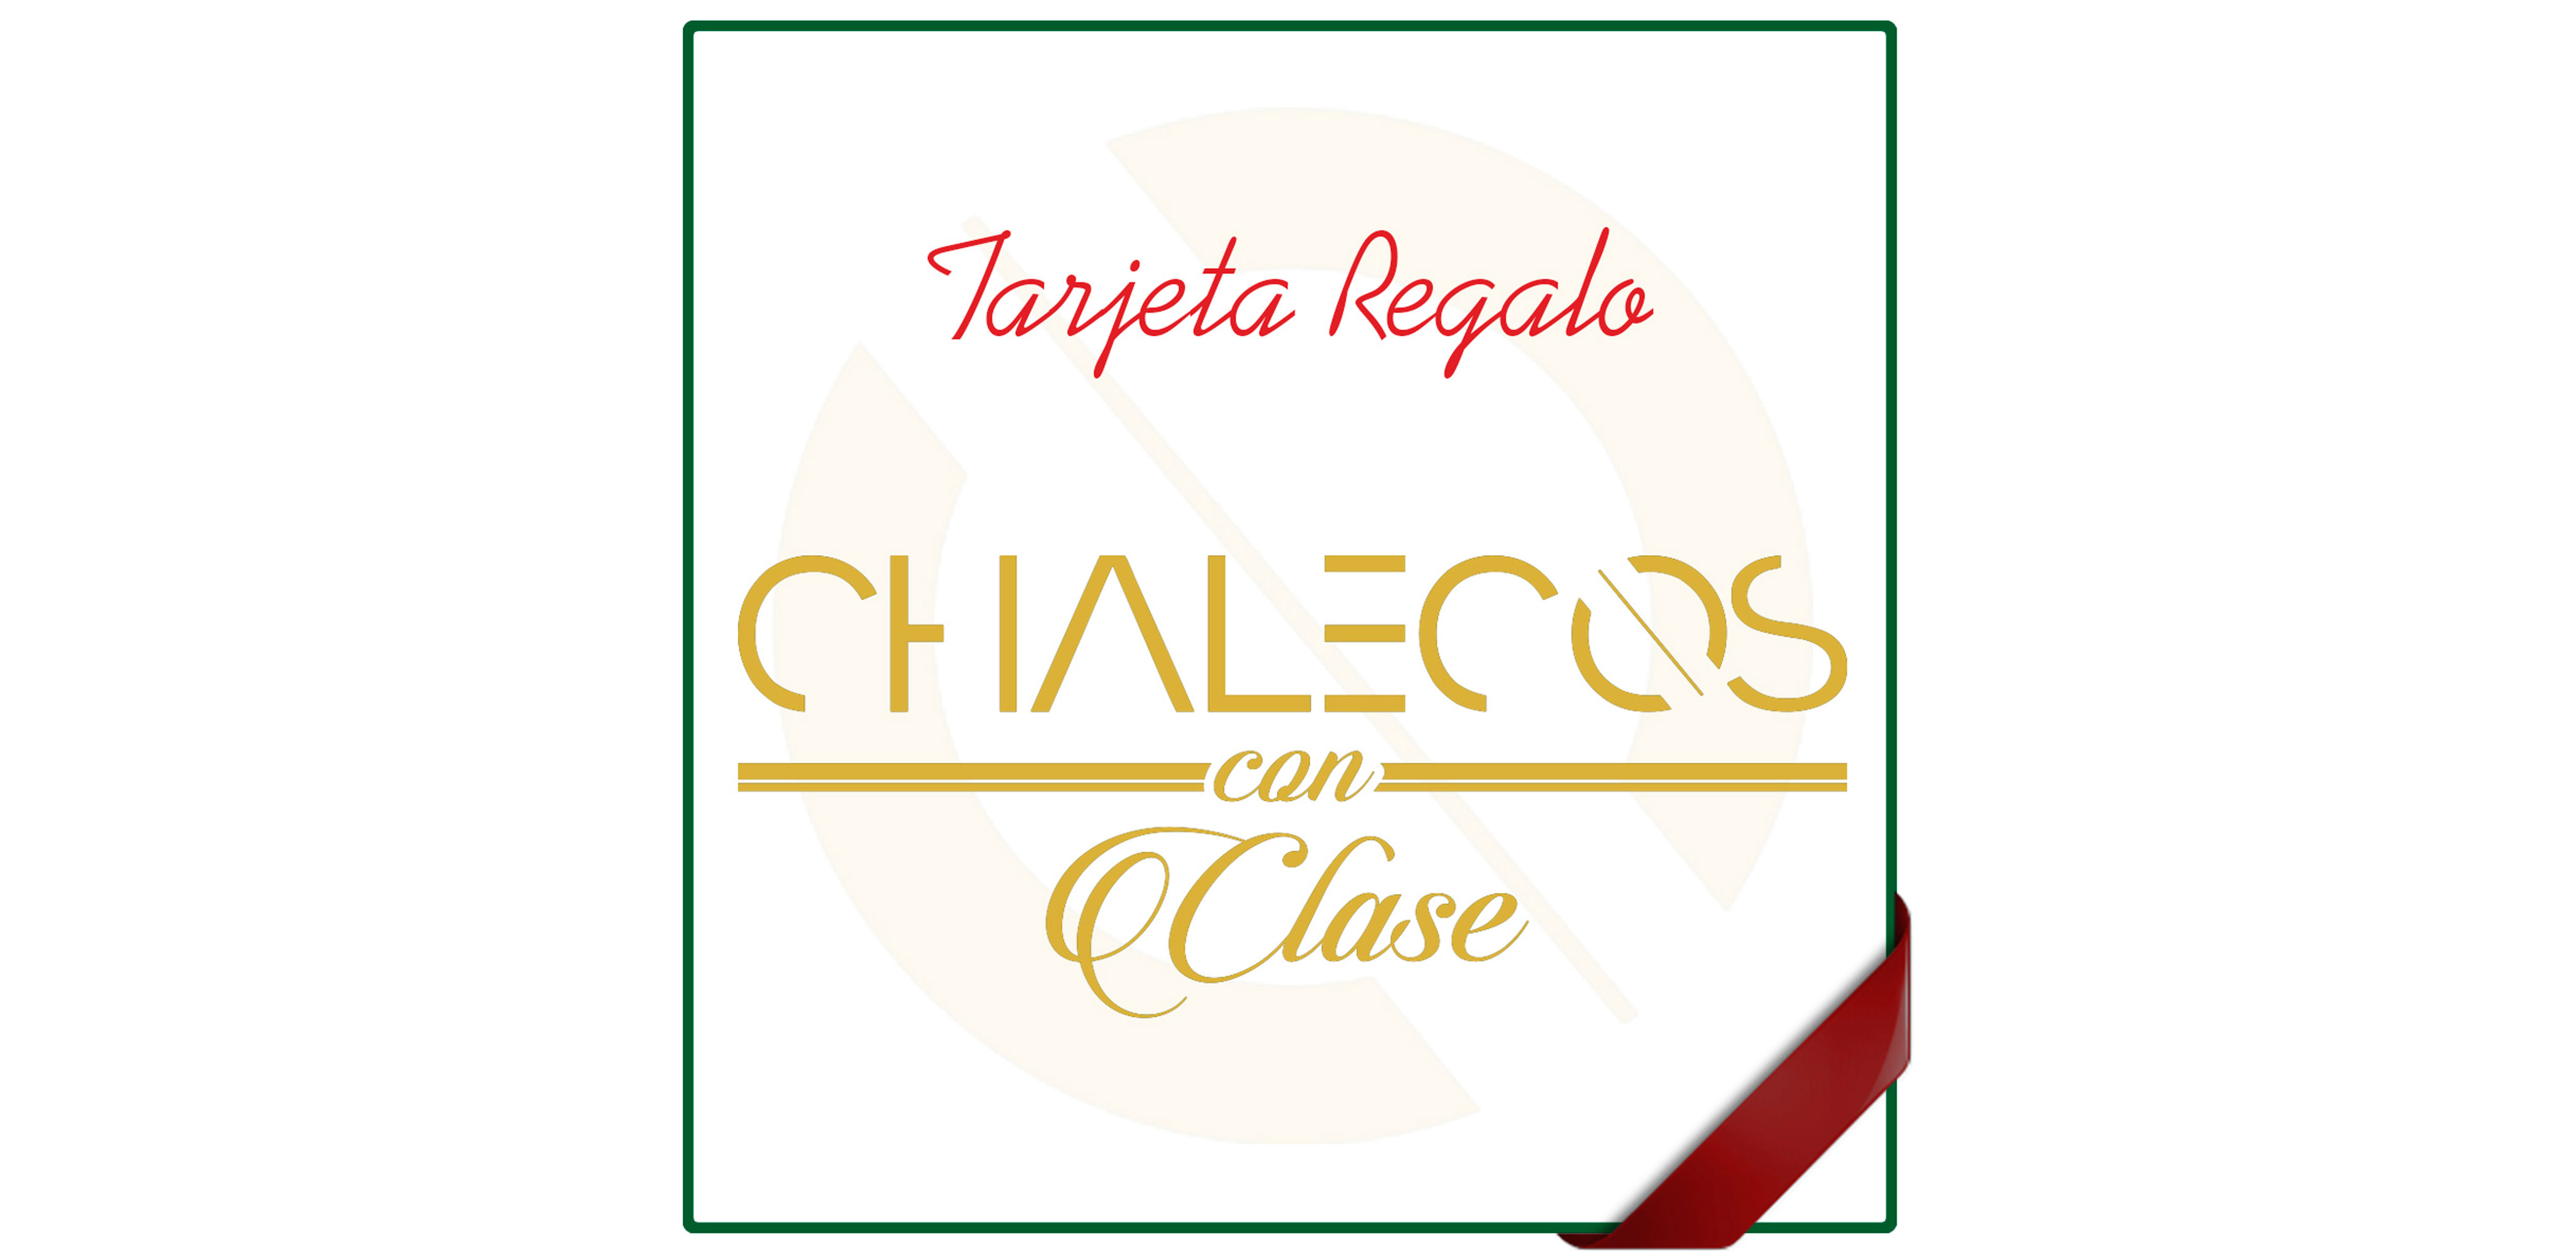 TARJETA REGALO CHALECOS CON CLASE